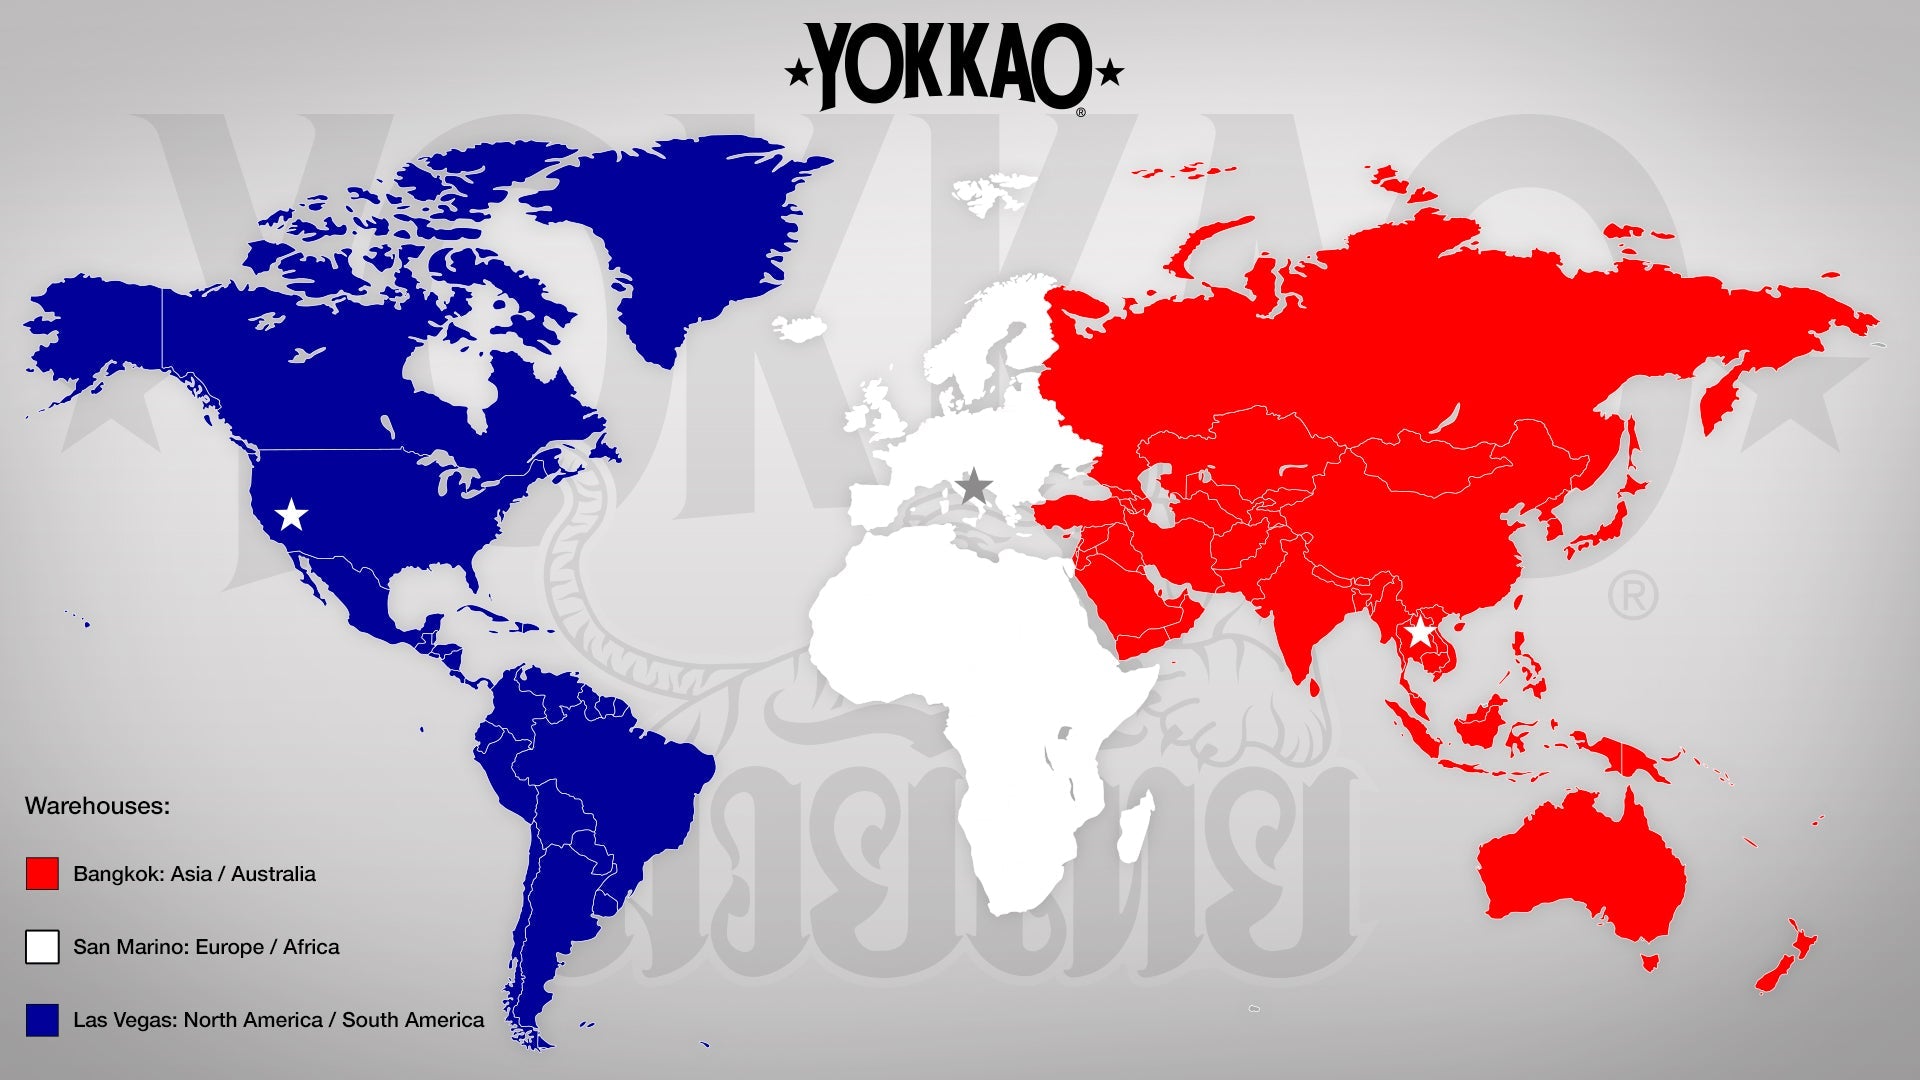 YOKKAO Launches Worldwide Retail & Wholesale Platform